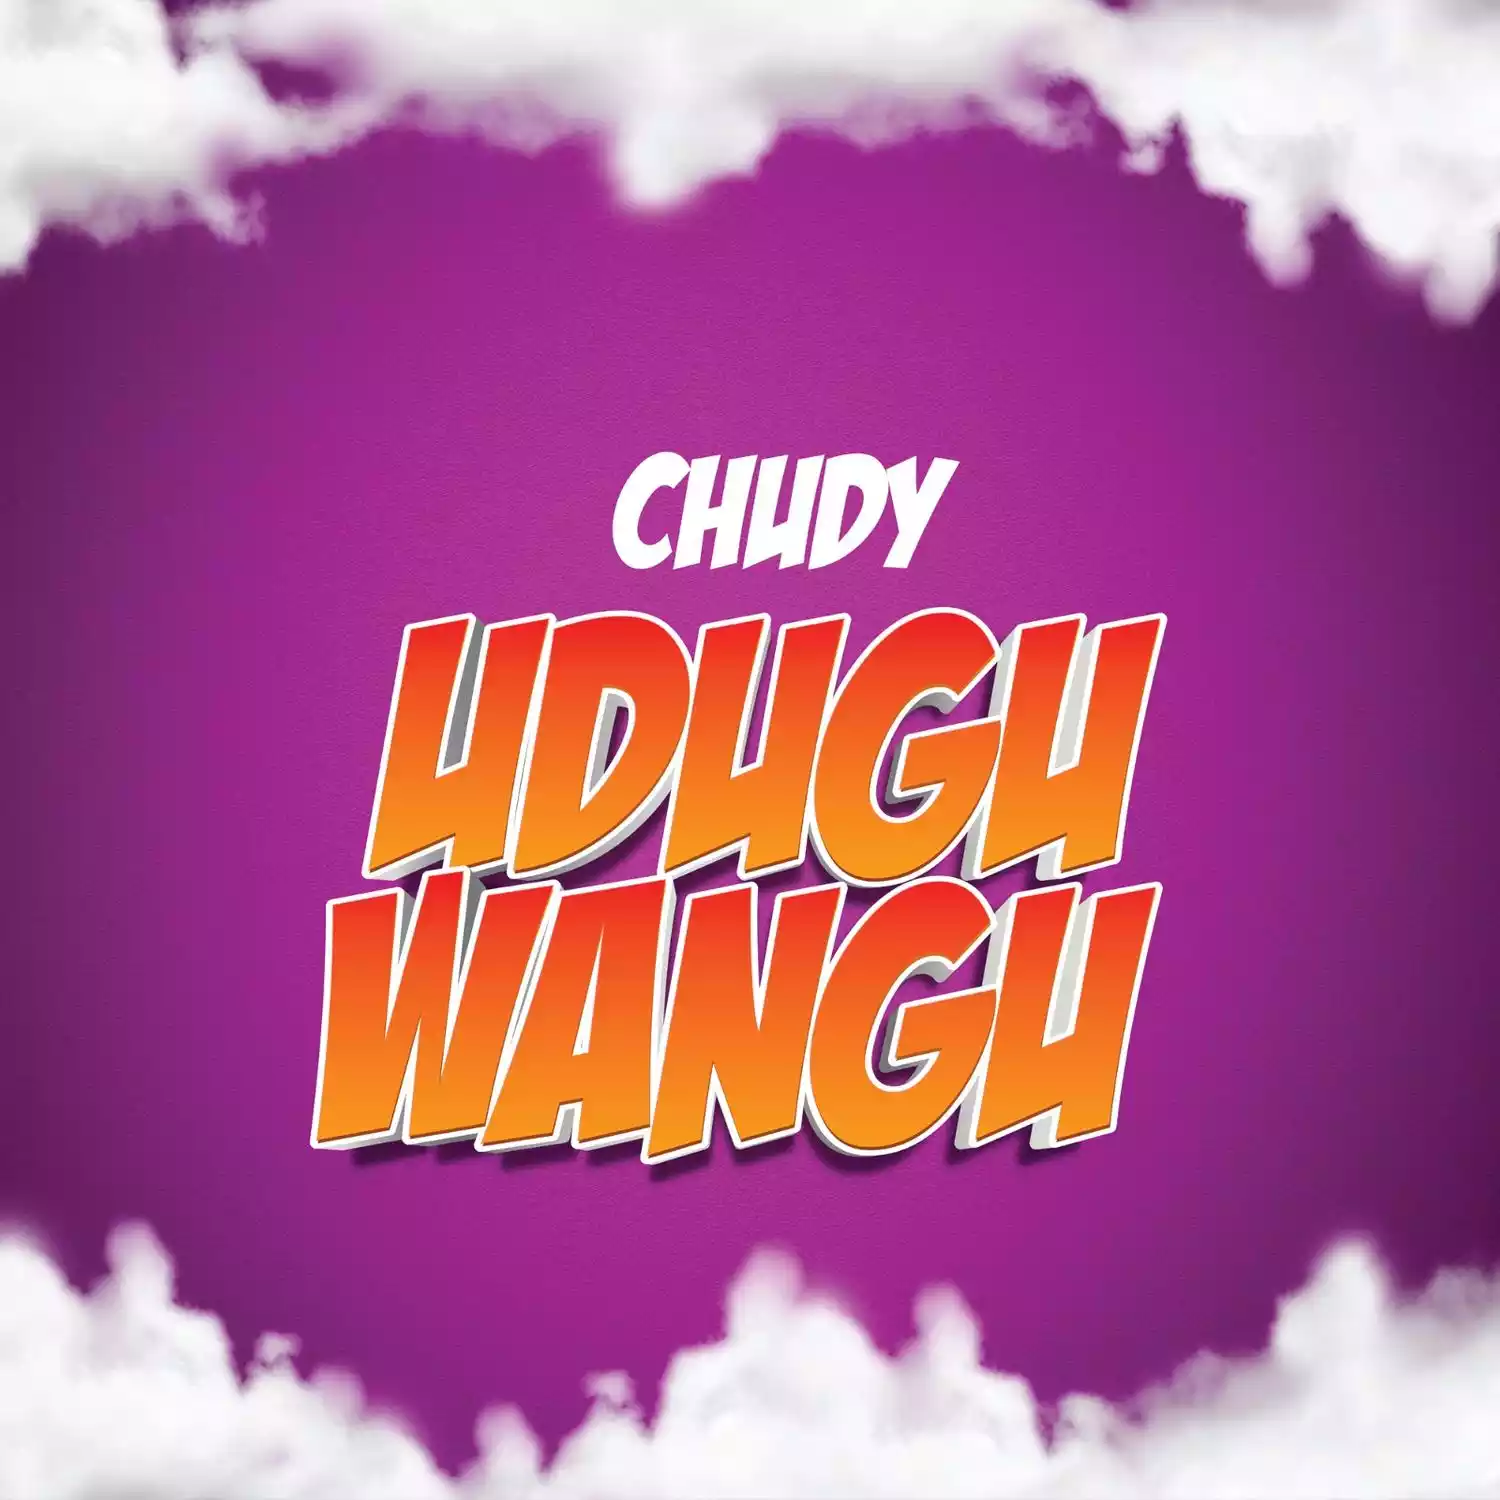 Chudy - Udugu Wangu Mp3 Download